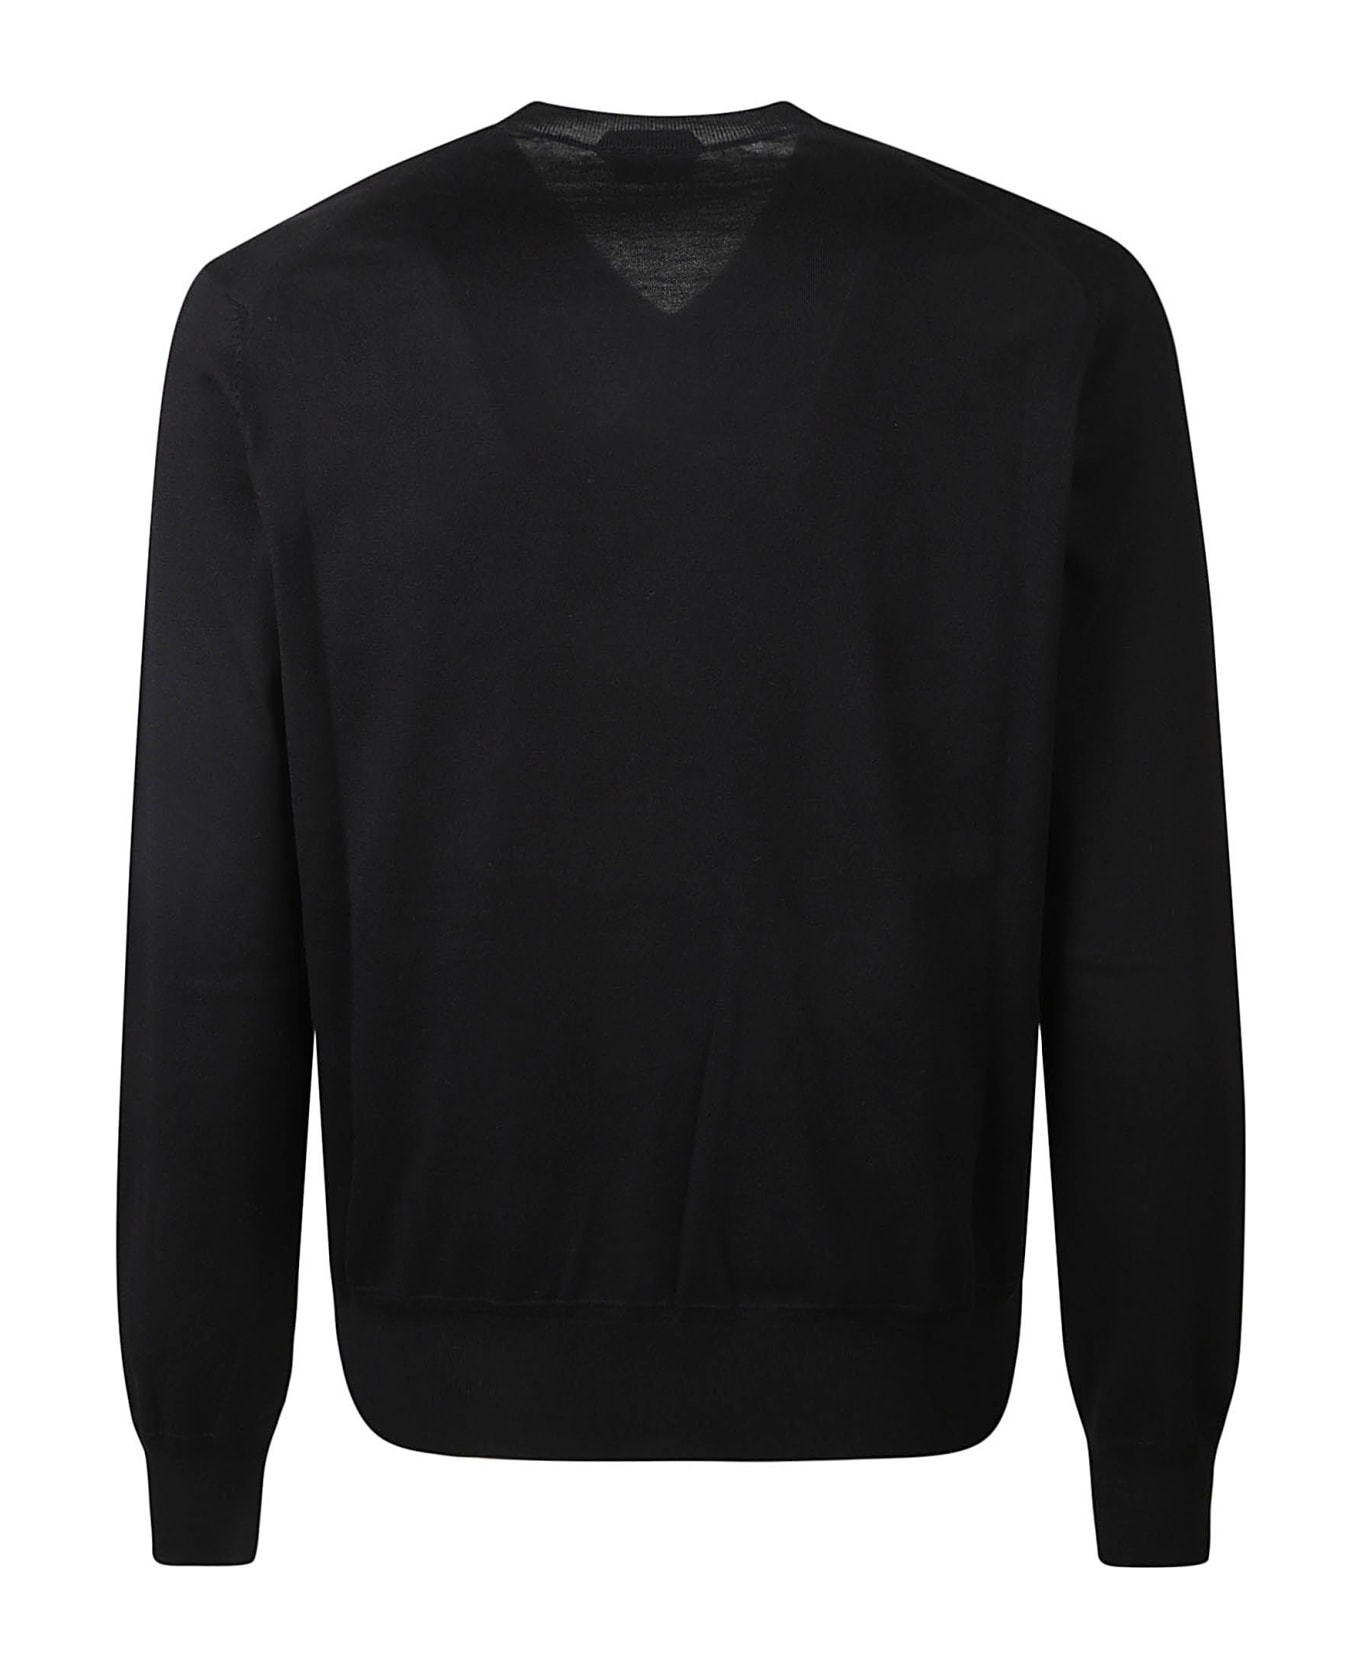 Tom Ford Round Neck Sweater - Black